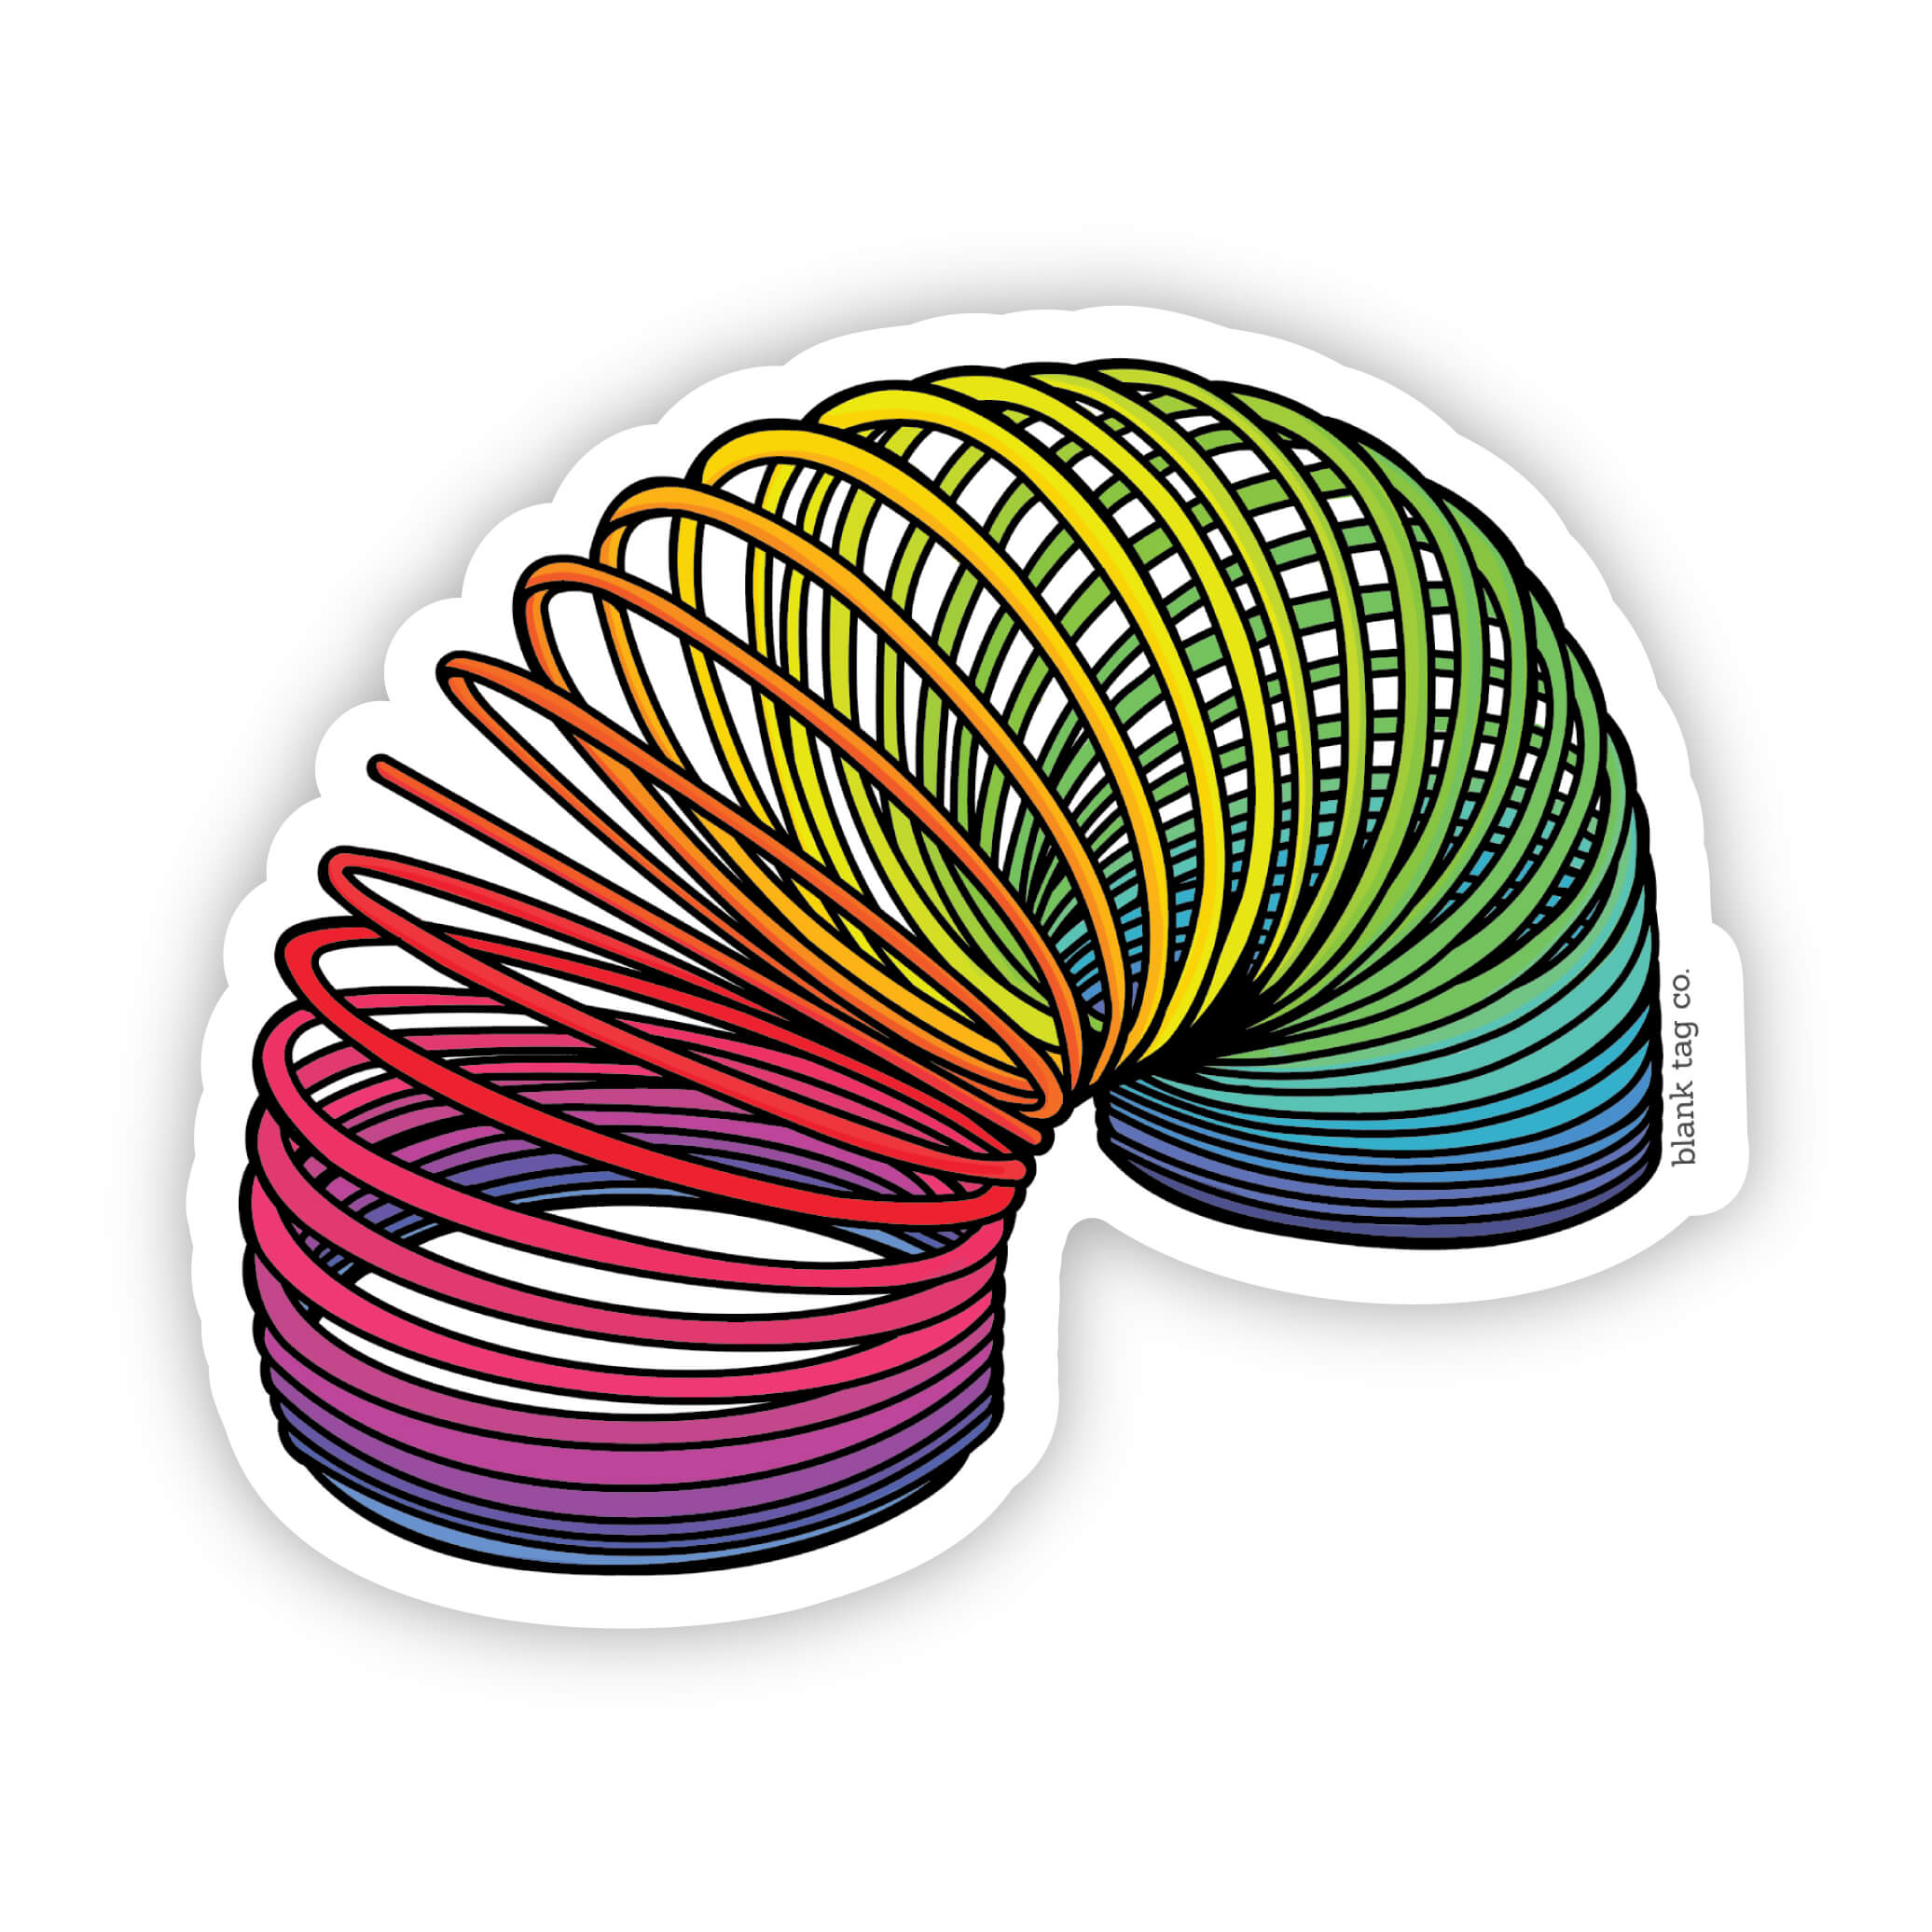 The Slinky Sticker